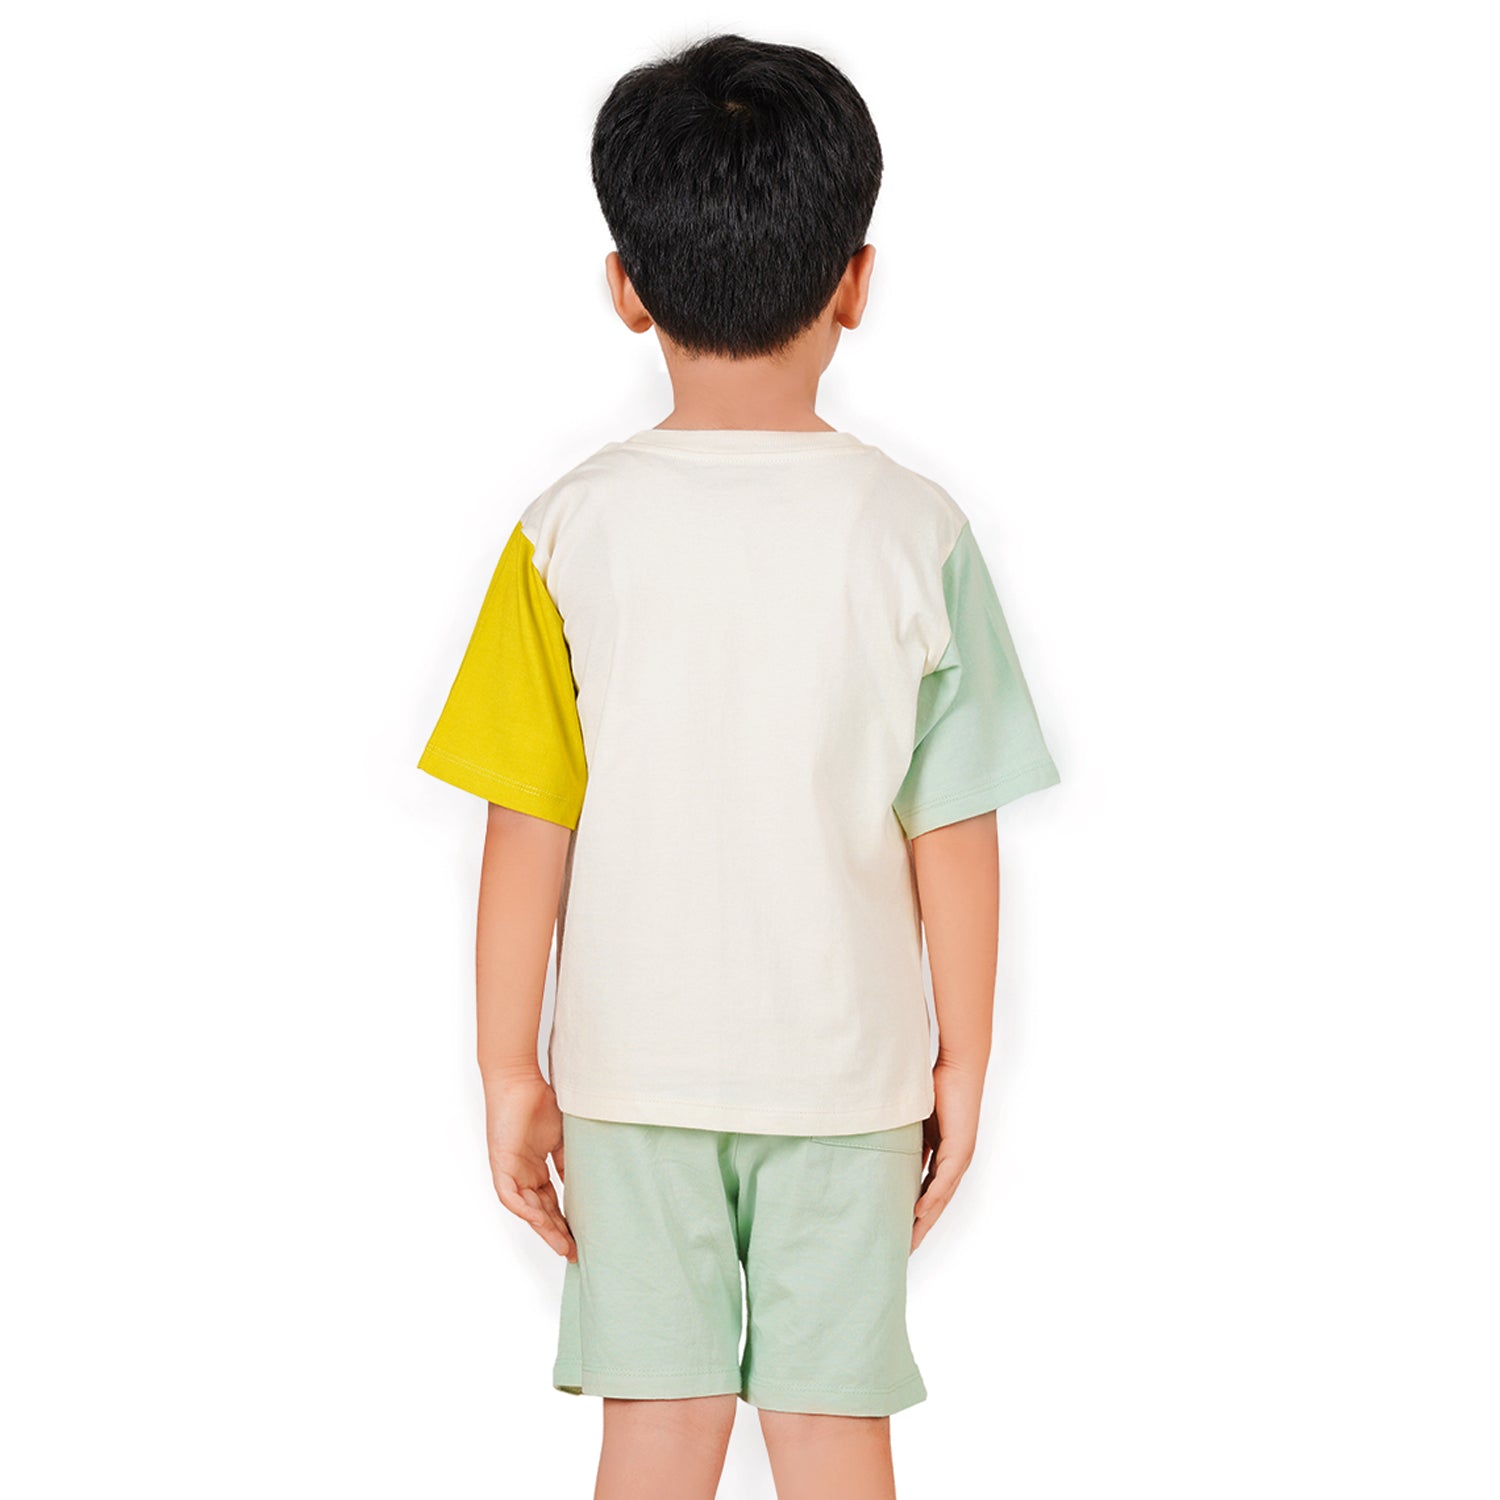 Miko Lolo Coral Dream T-shirt with Aqua Shorts Unisex Set